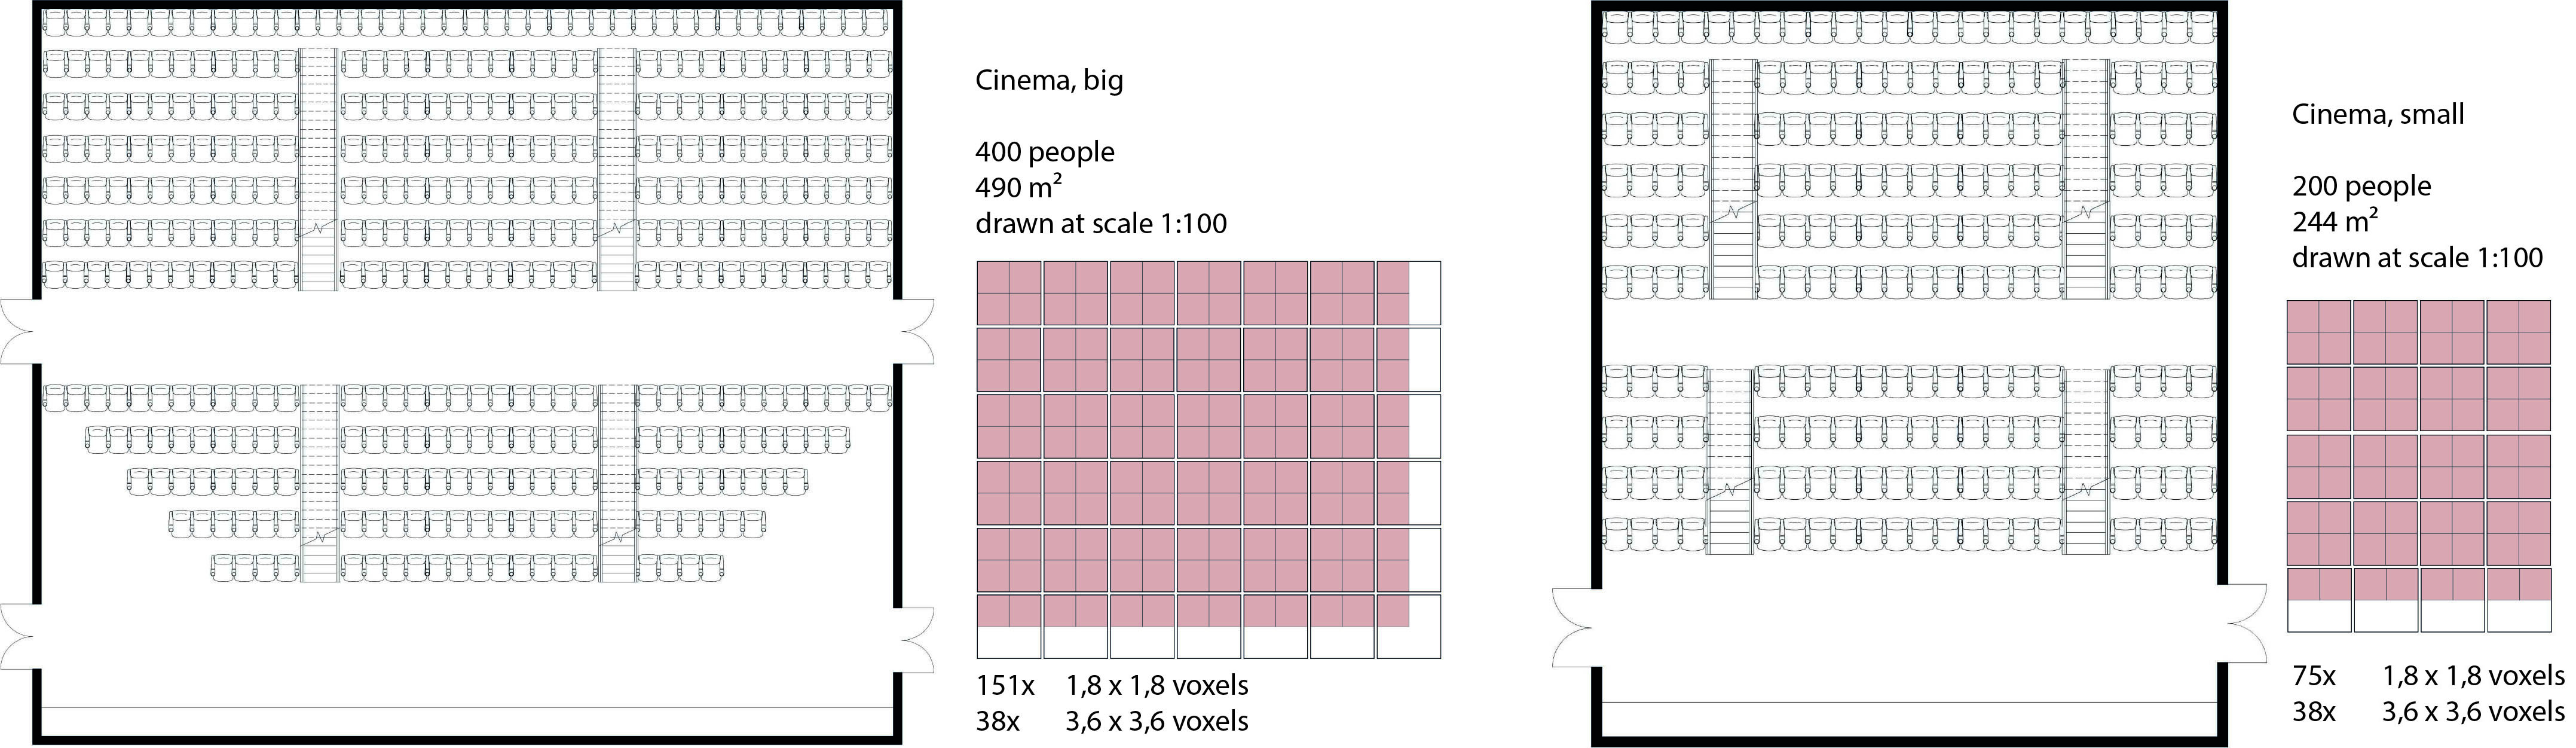 Floorplan - Cinema big and small